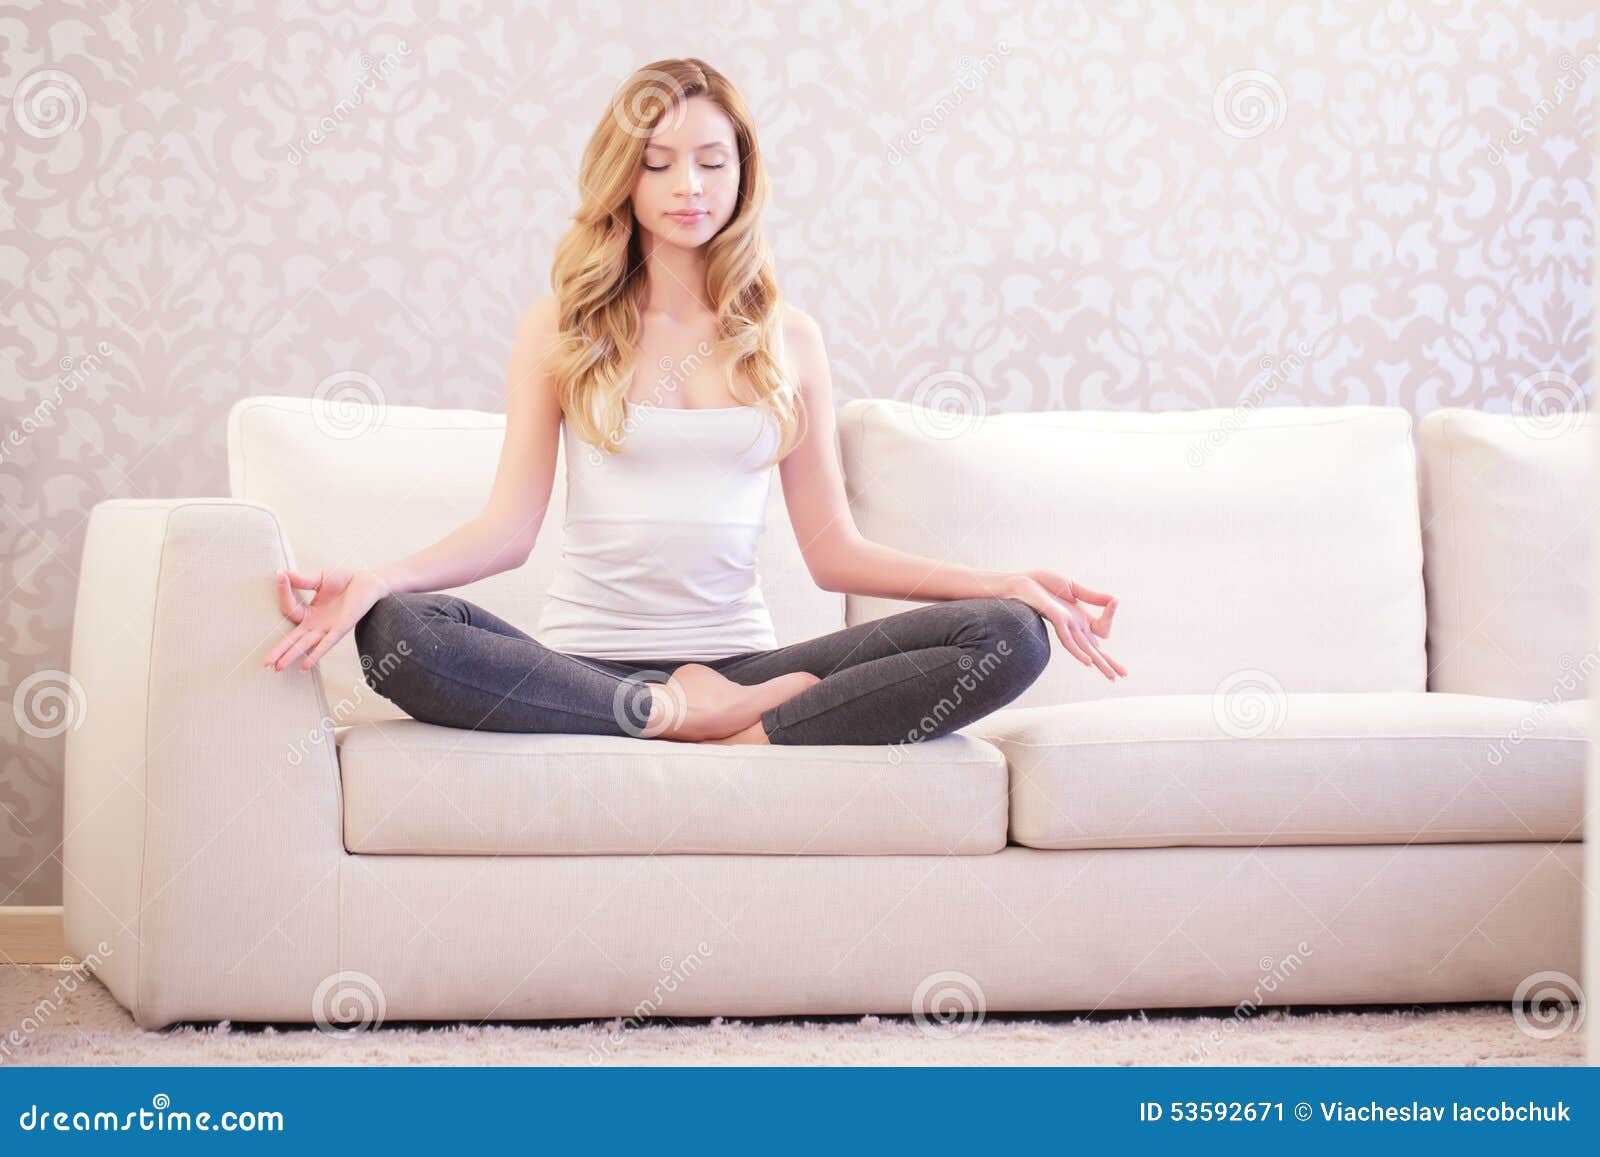 Pretty Lady Doing Yoga on Sofa Stock Image - Image of positive, peace:  53592671